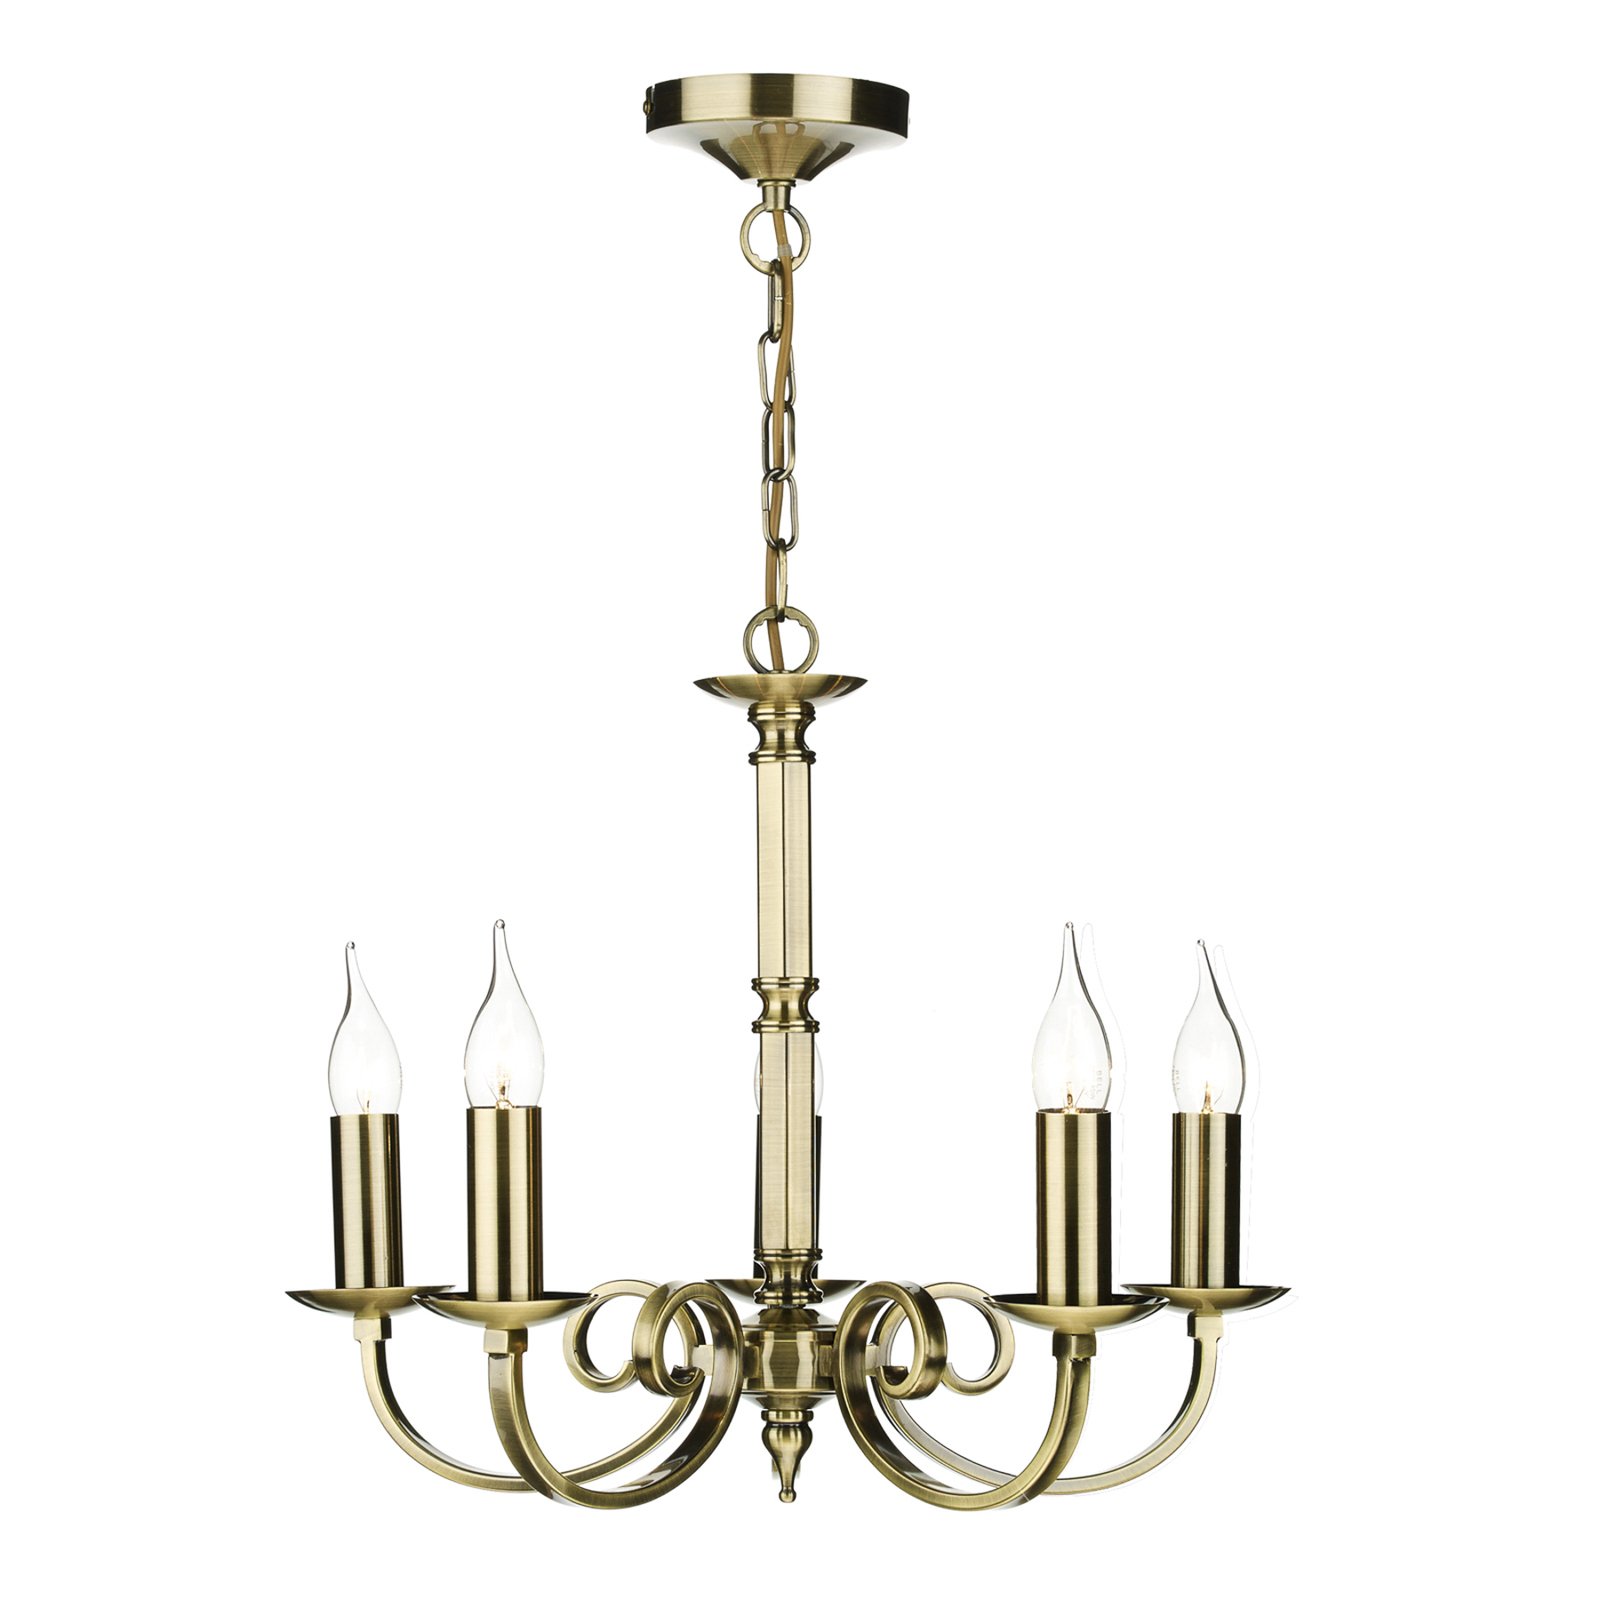 Murray chandelier in antique brass, 5-bulb